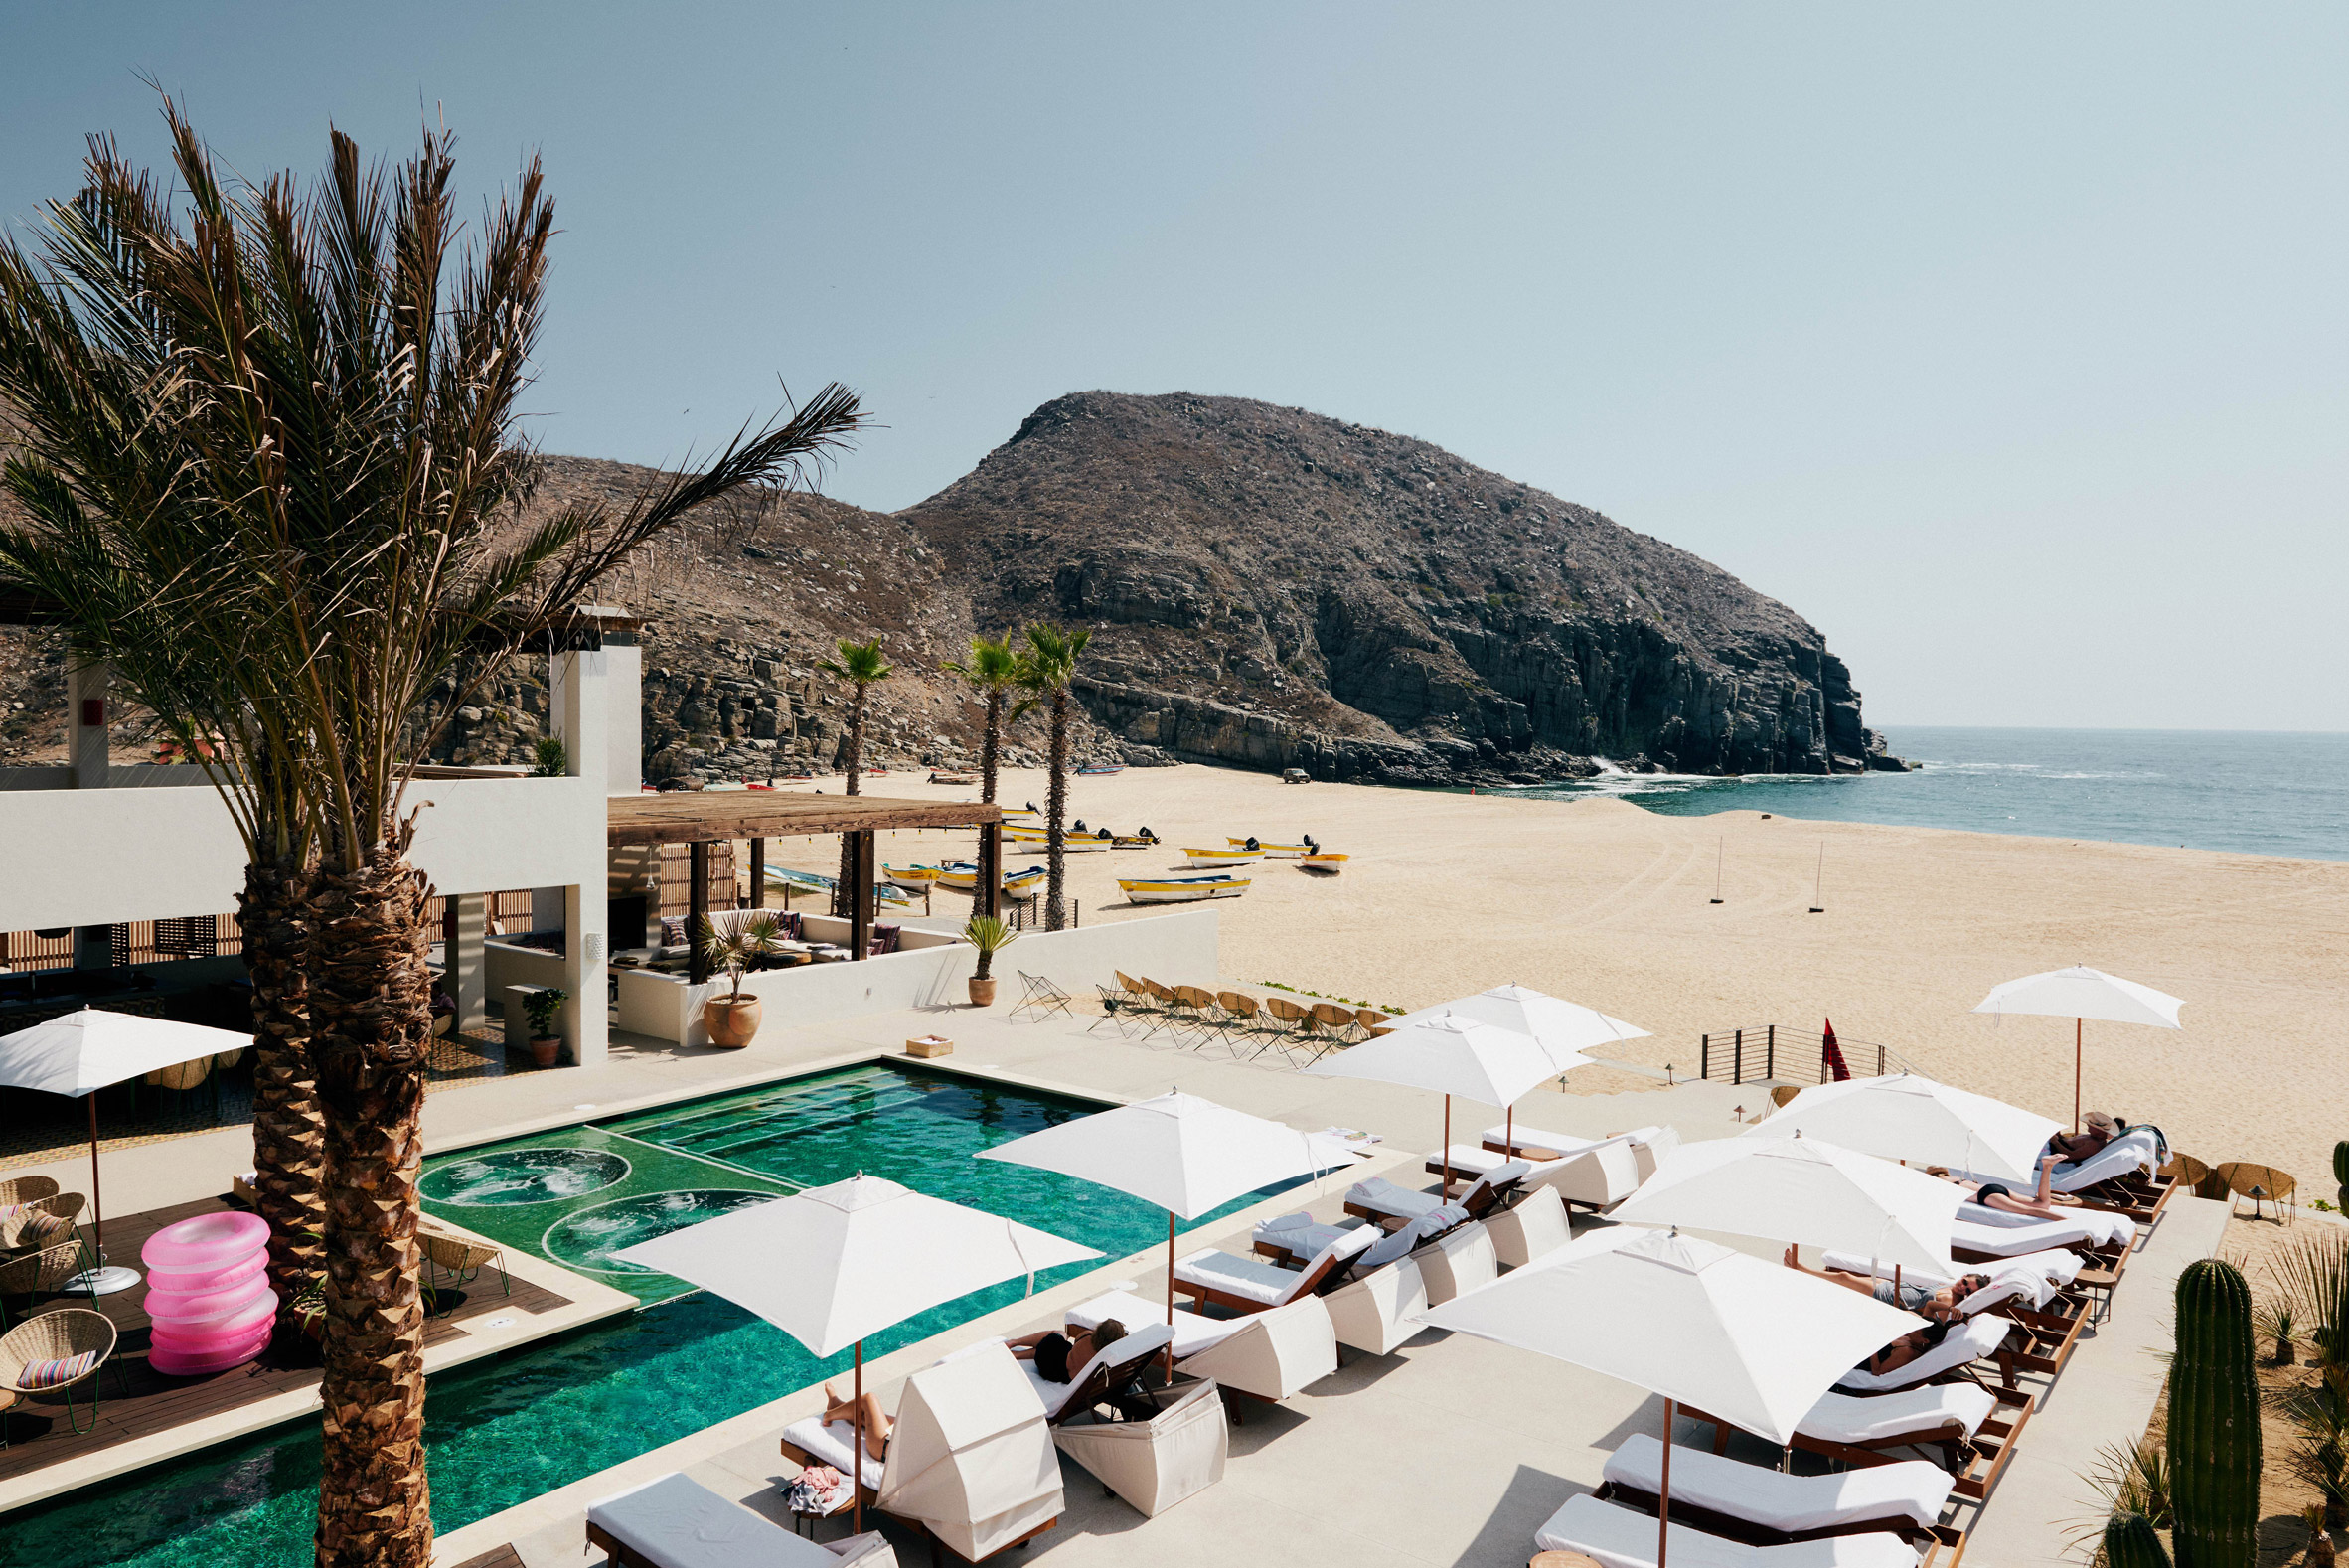 Mexico's Hotel San Cristóbal boasts prime beachfront location